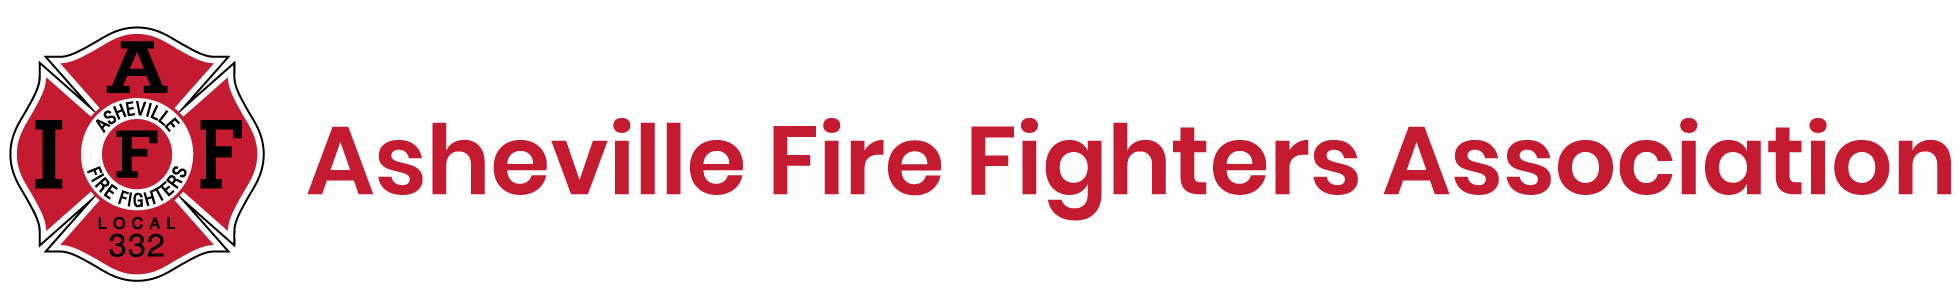 Asheville Fire Fighters Association